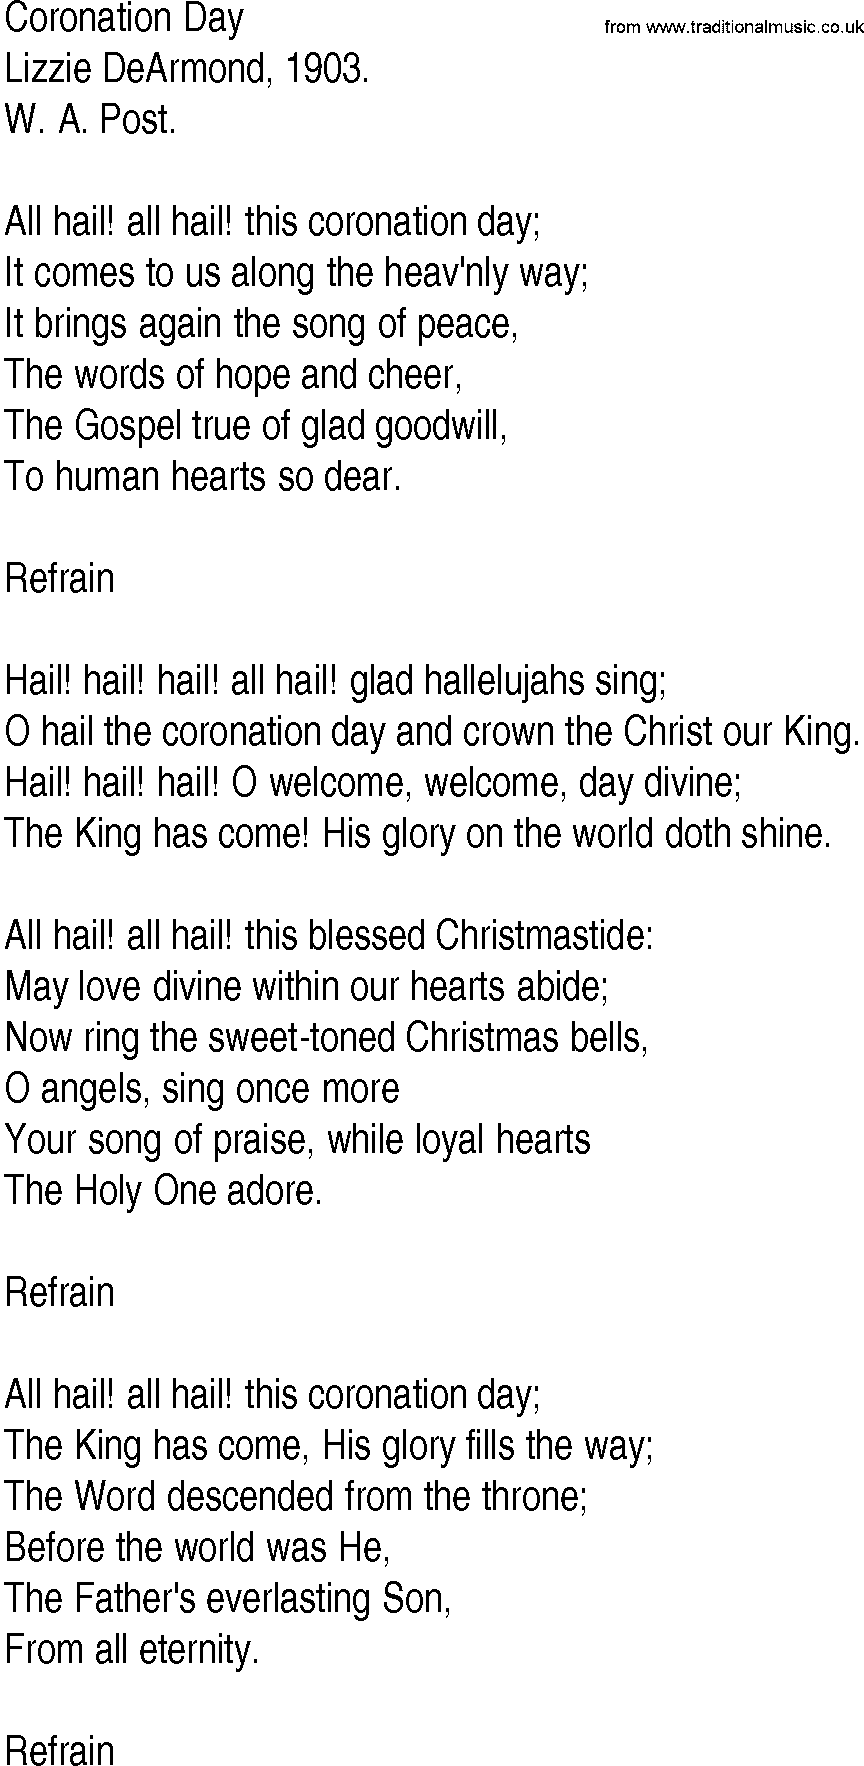 Hymn and Gospel Song: Coronation Day by Lizzie DeArmond lyrics